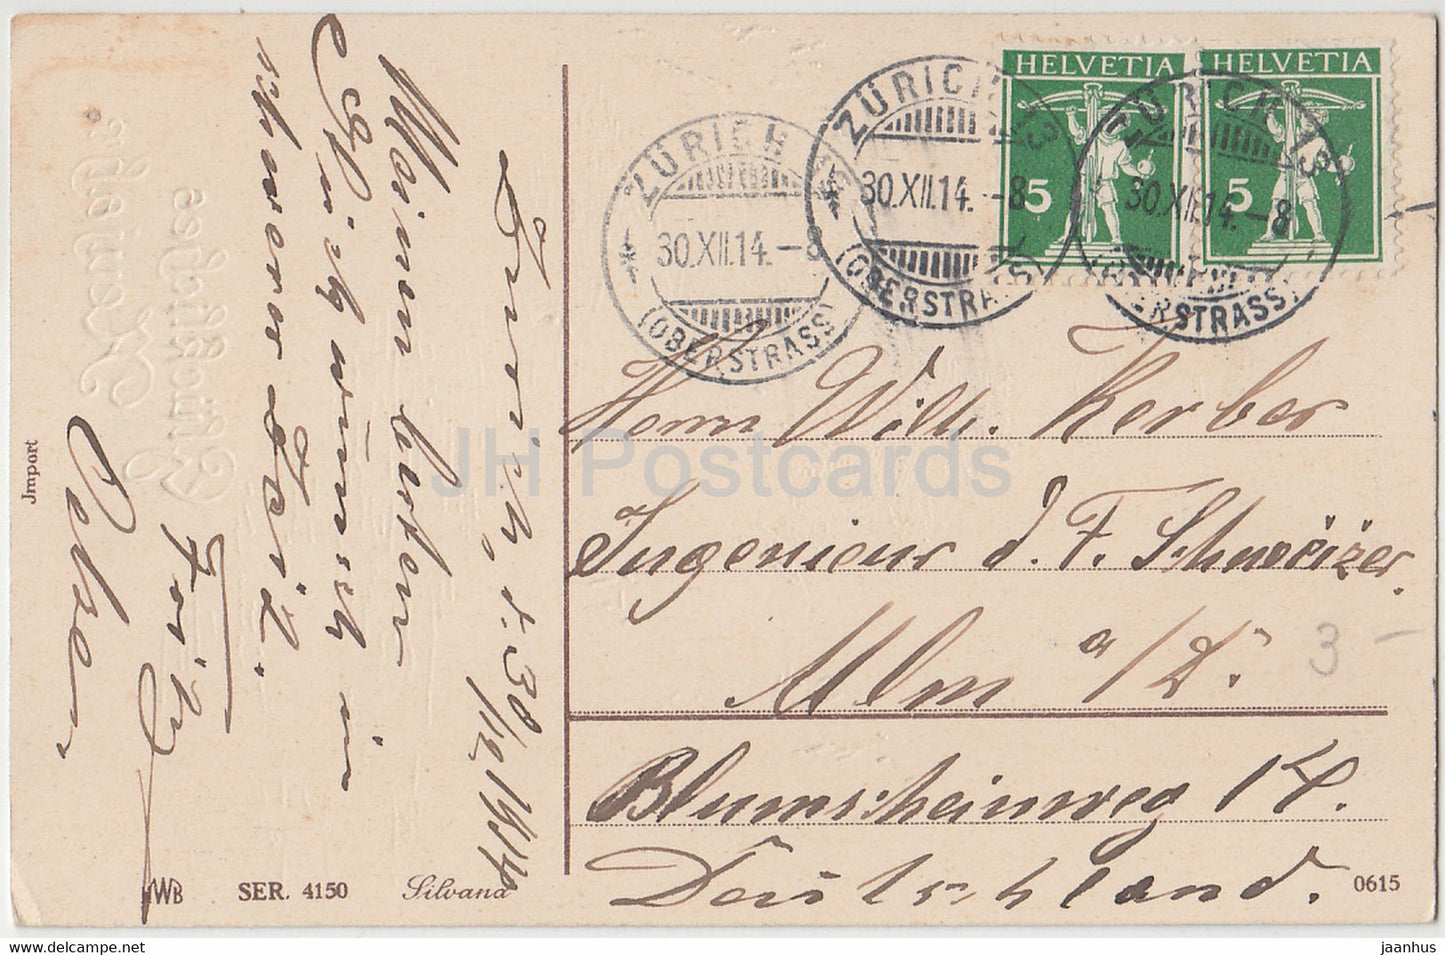 New Year Greeting Card - Gluckliches Neujahr - house - river - HWB SER 4150 - old postcard - 1914 - Germany - used